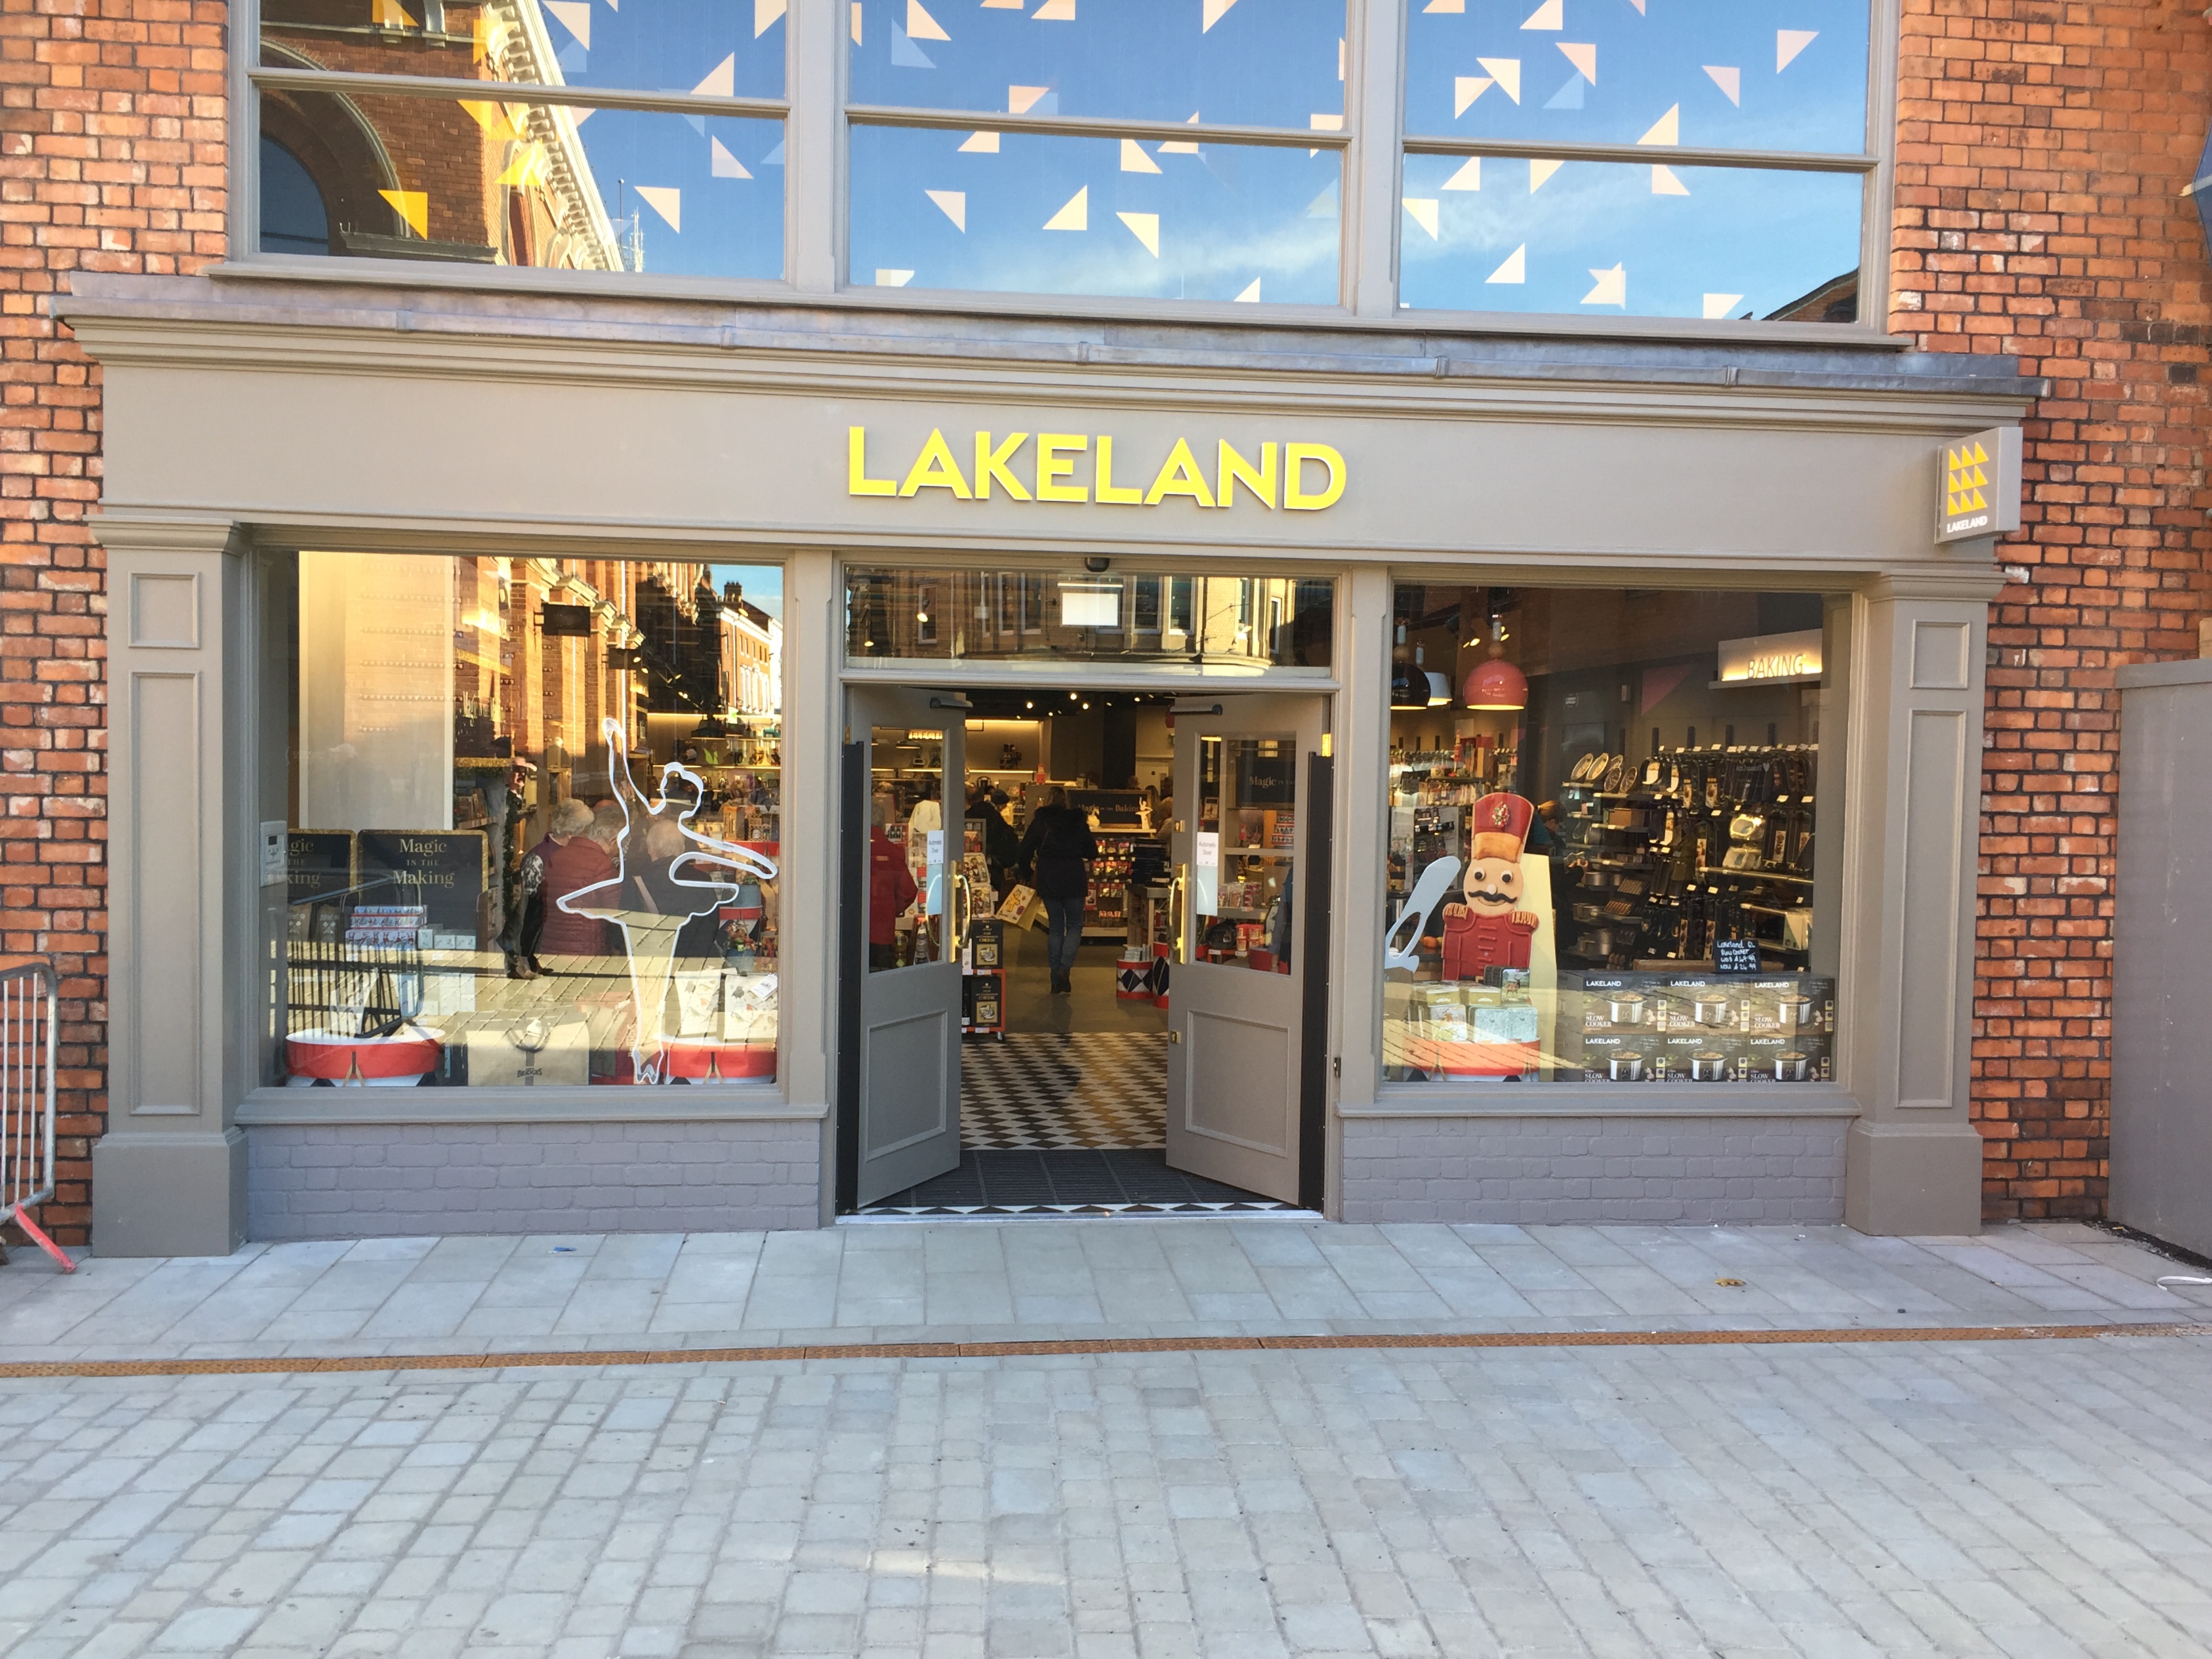 The new Lakeland shop in the Cornhill Quarter